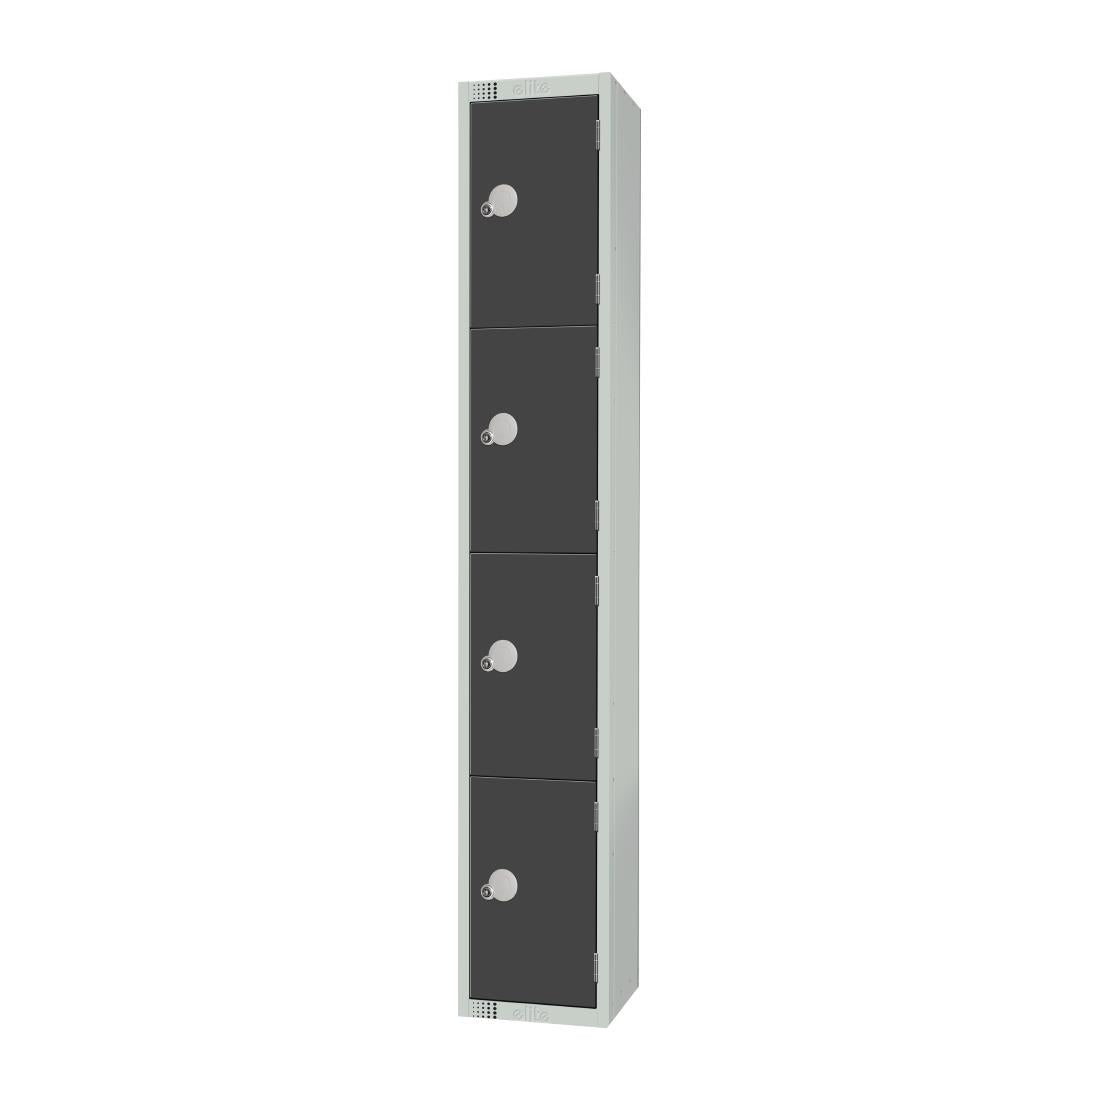 GR680-CL Elite Four Door Manual Combination Locker Locker Graphite Grey JD Catering Equipment Solutions Ltd